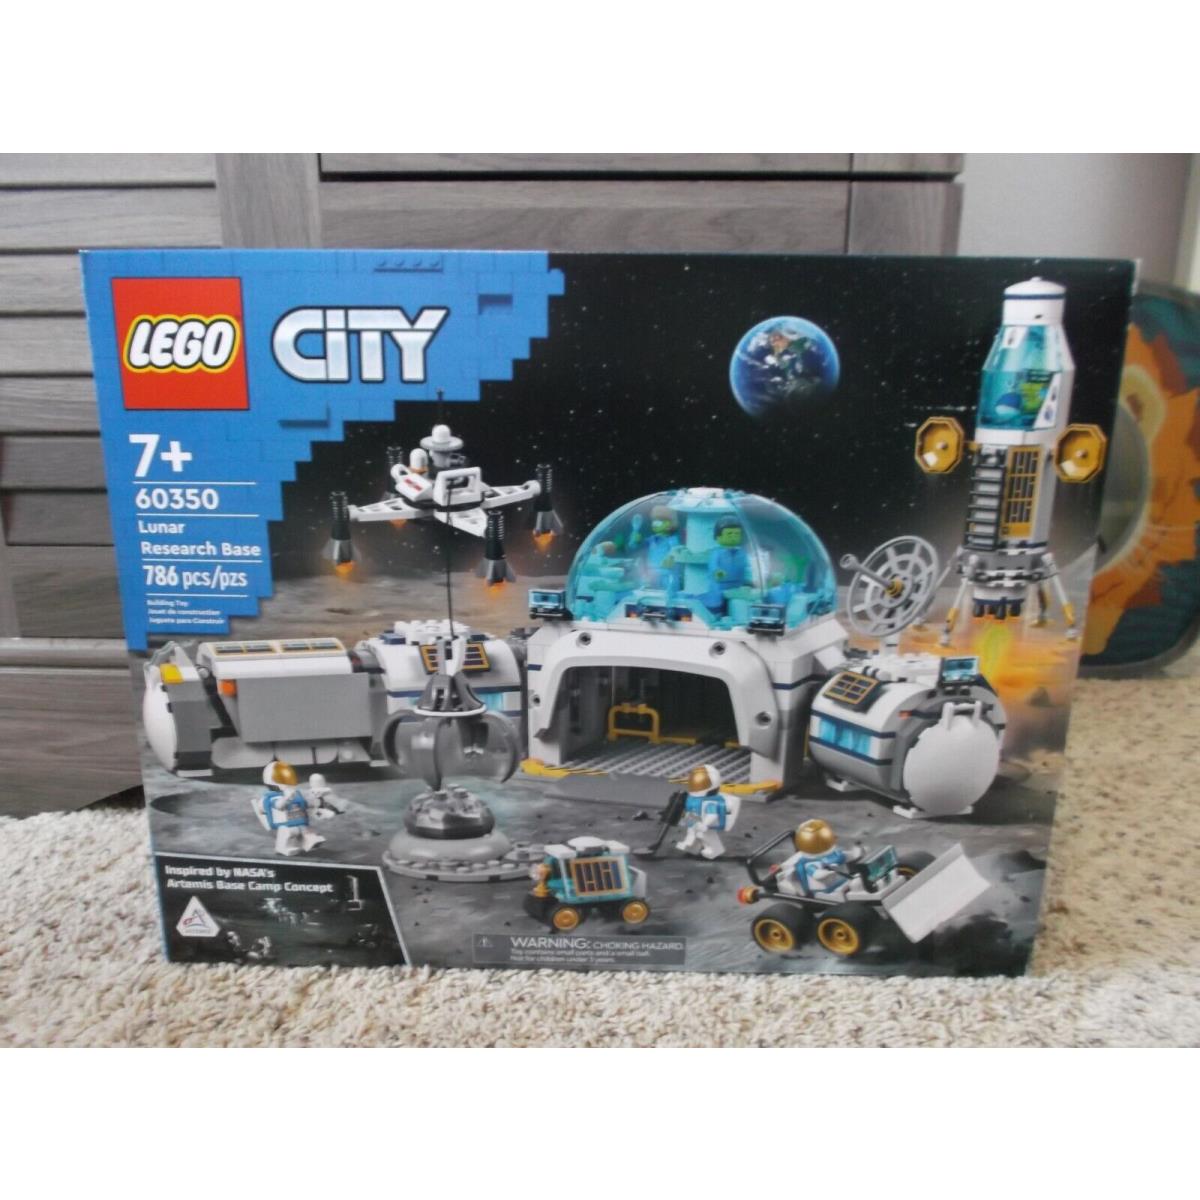 Lego City- Lunar Research Base 60350